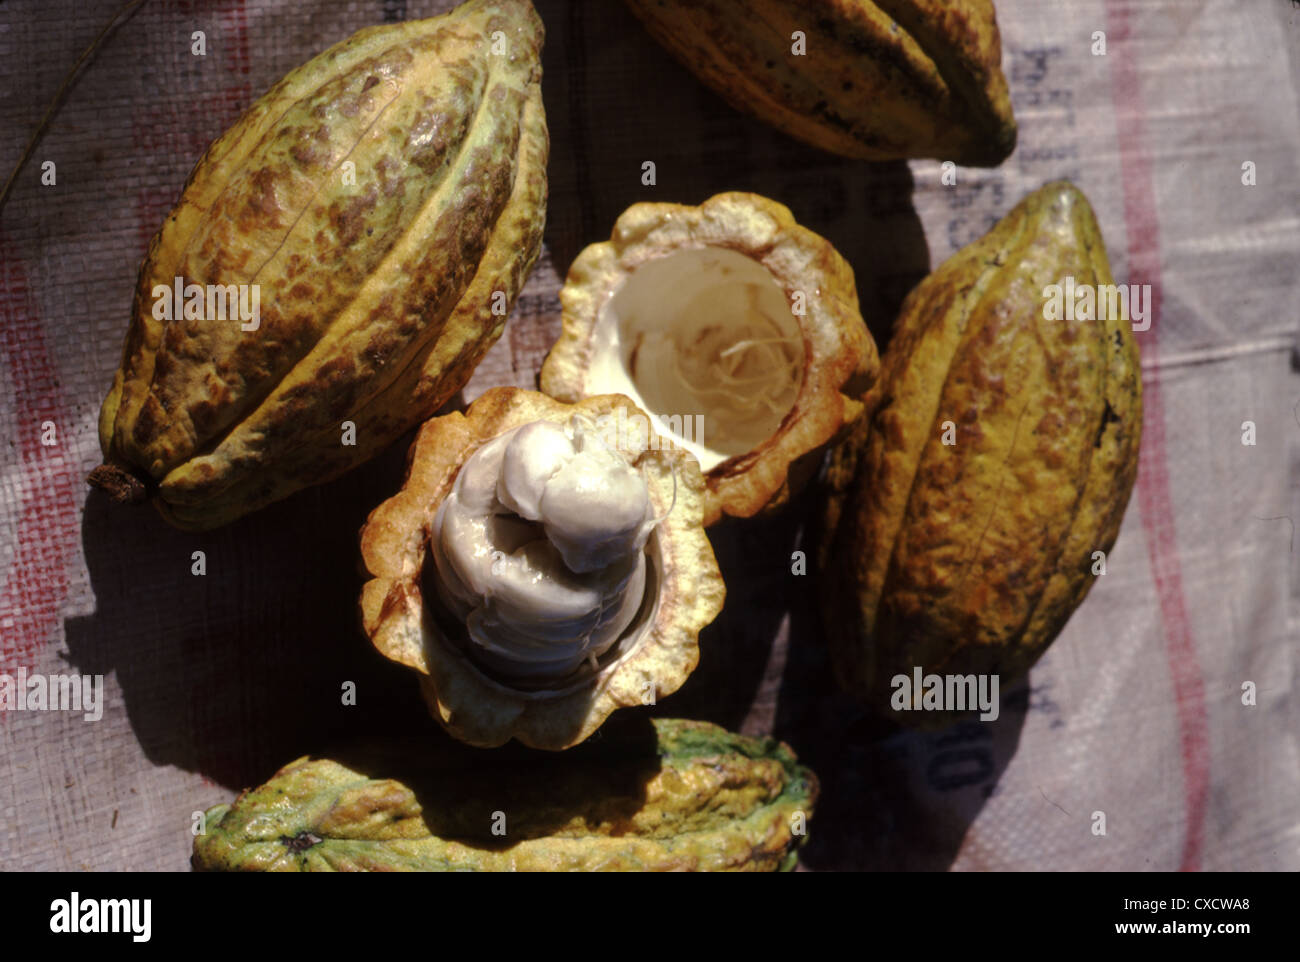 Una vaina de cacao se agrieta abierta revelando la pulpa, Malasia Foto de stock